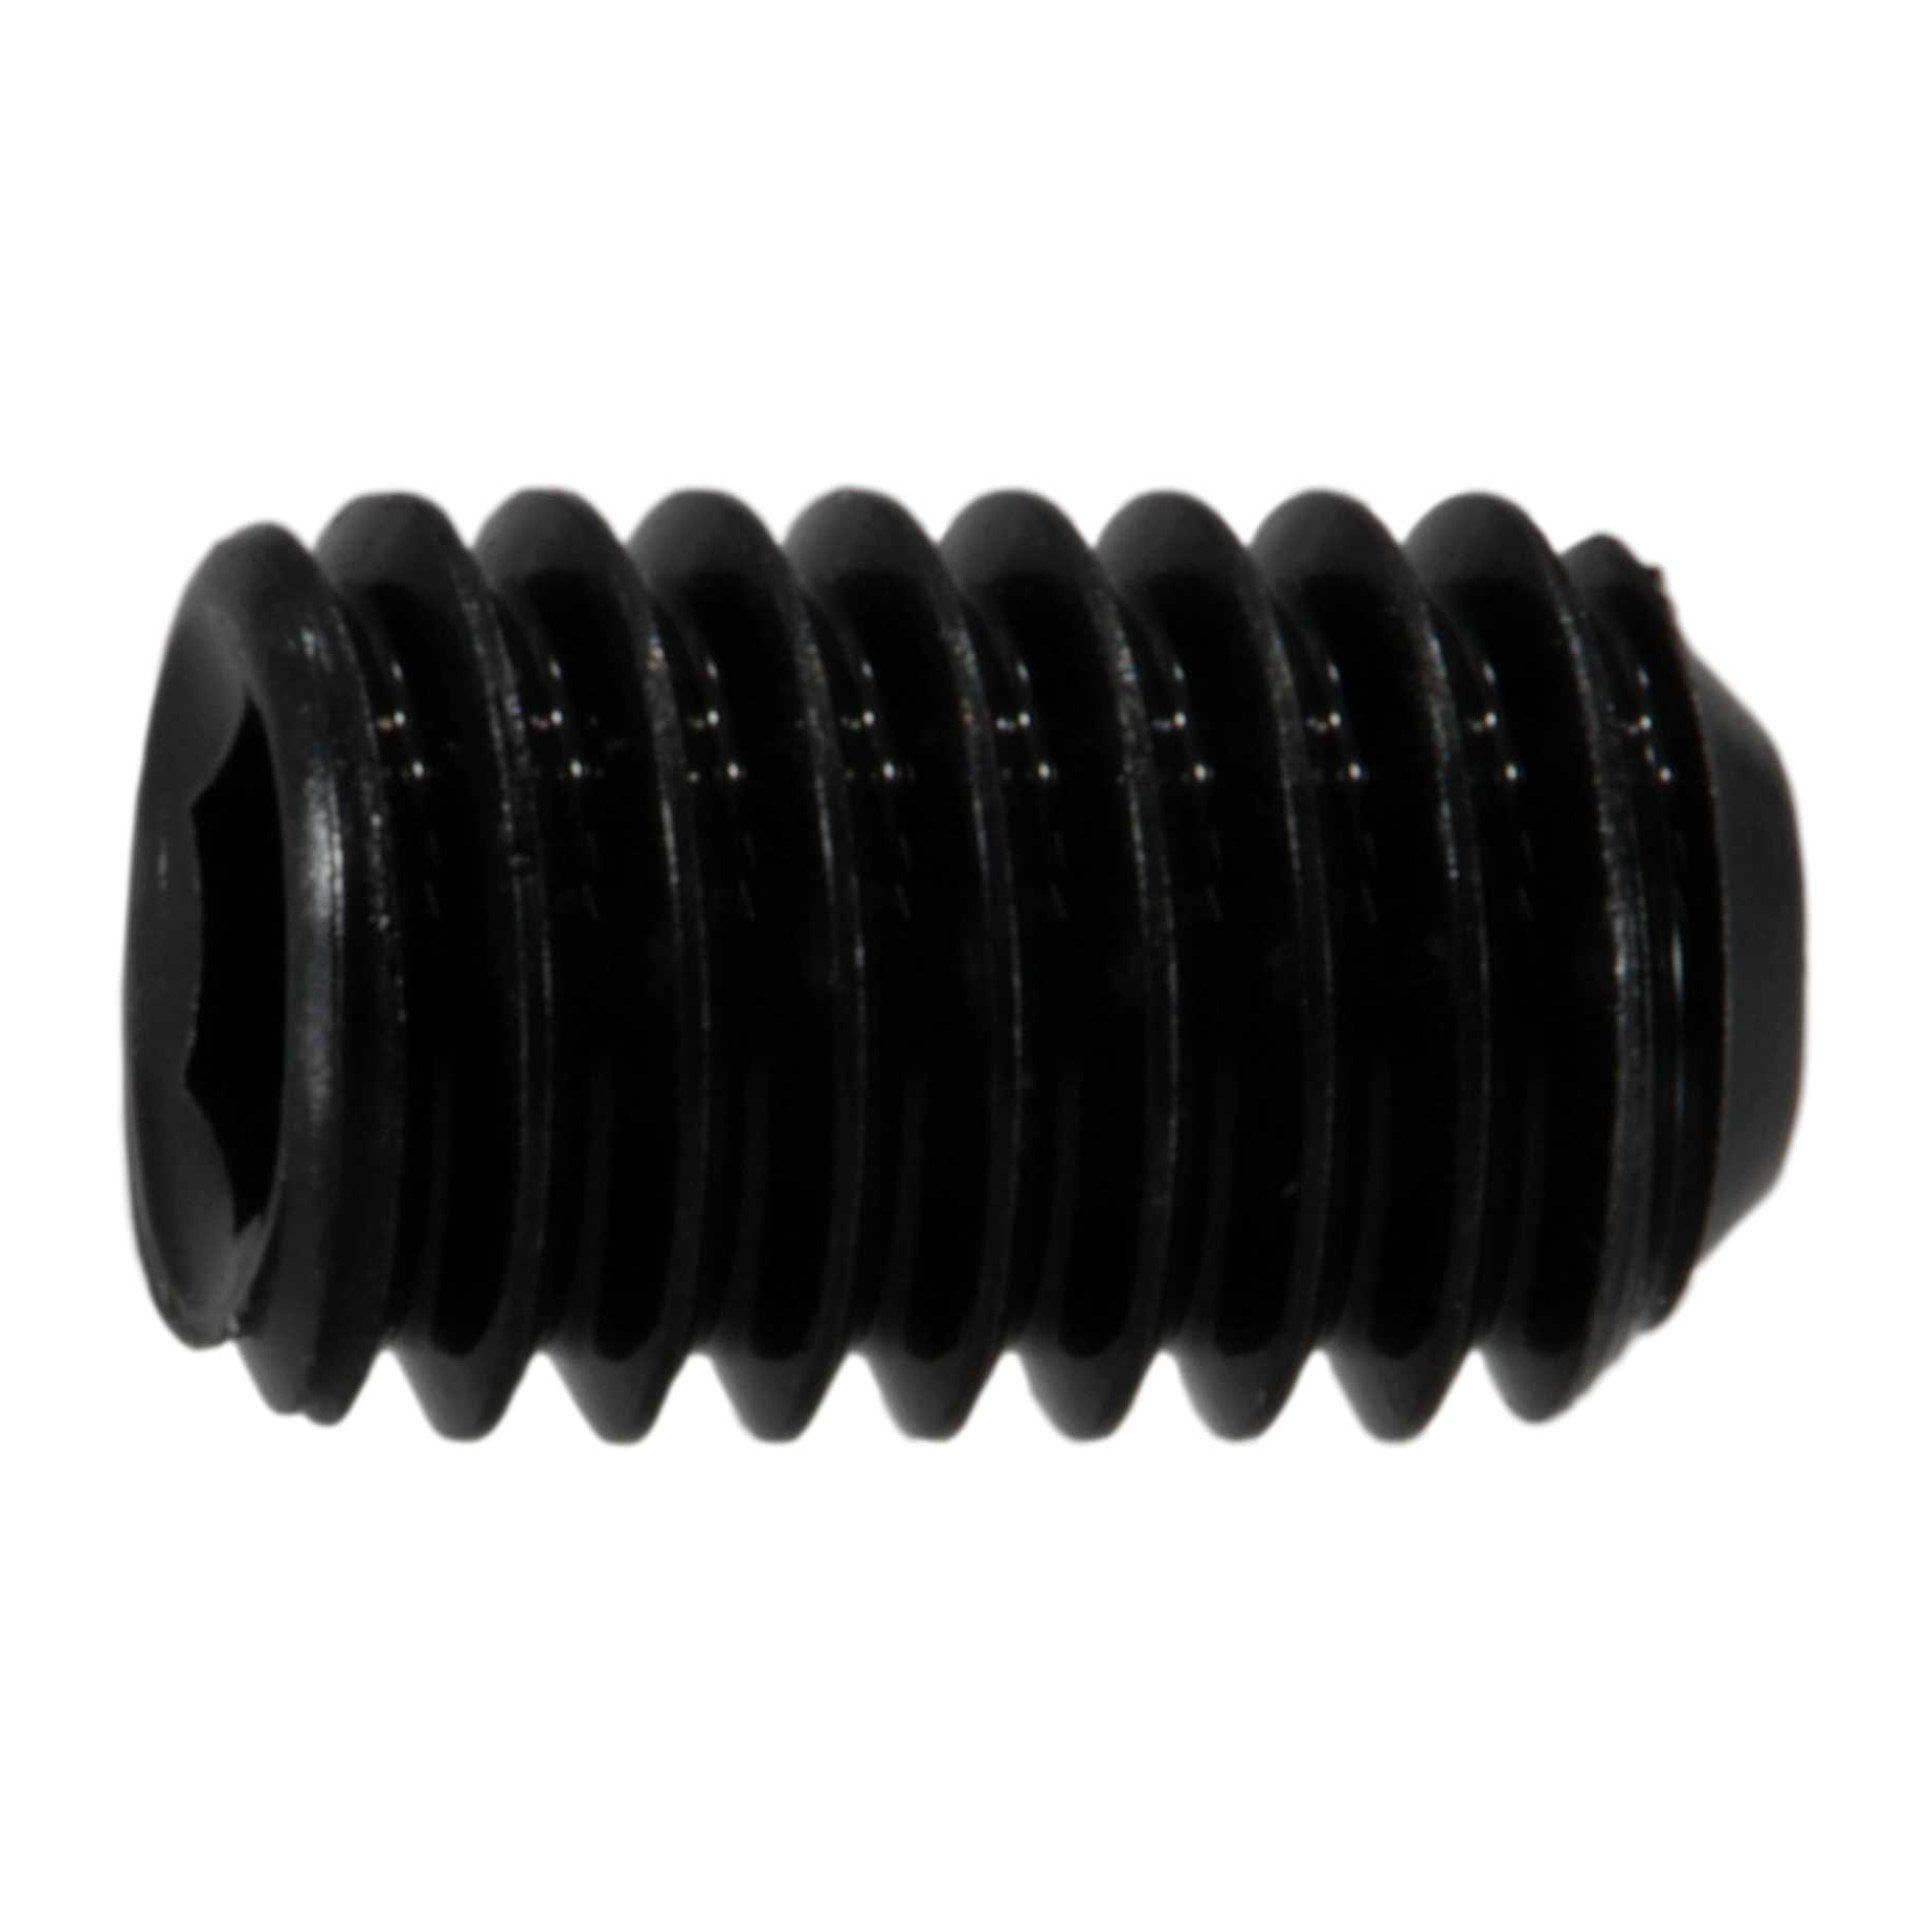 Black Alloy Steel #8-36 x 3/16" Socket SET / GRUB SCREWS Cup Point Qty 20 